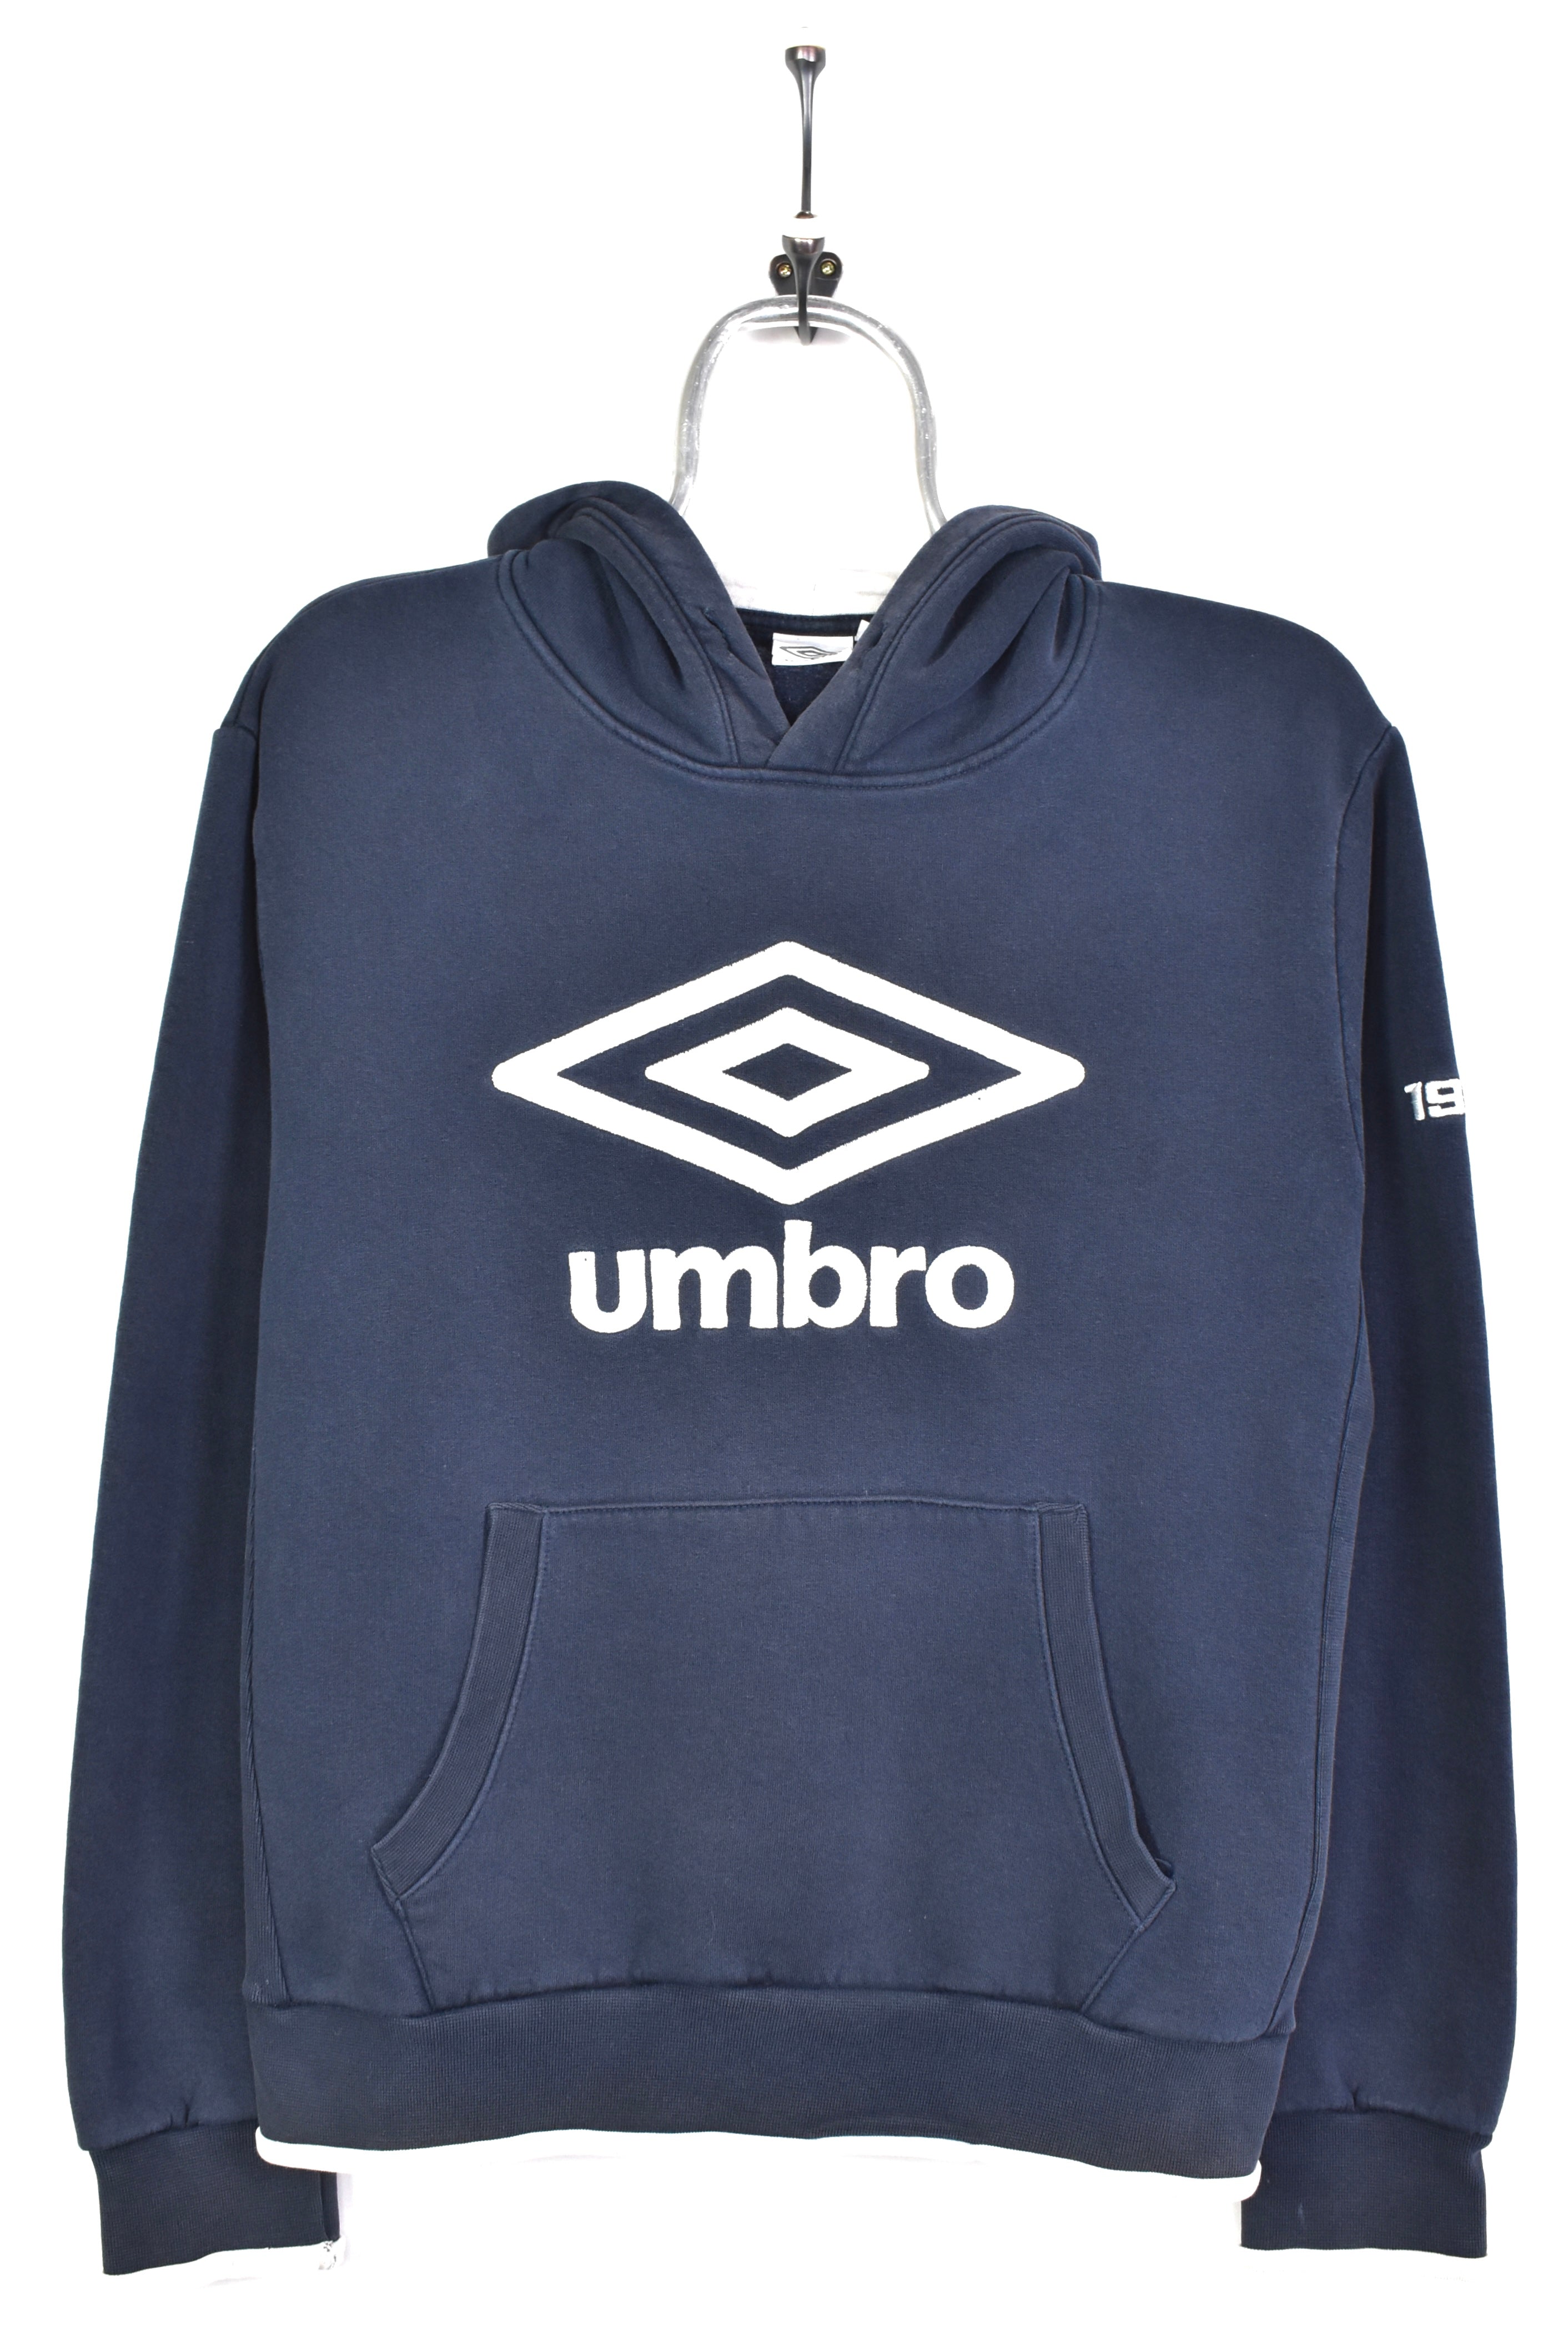 Vintage umbro embroidered navy hoodie | small UMBRO